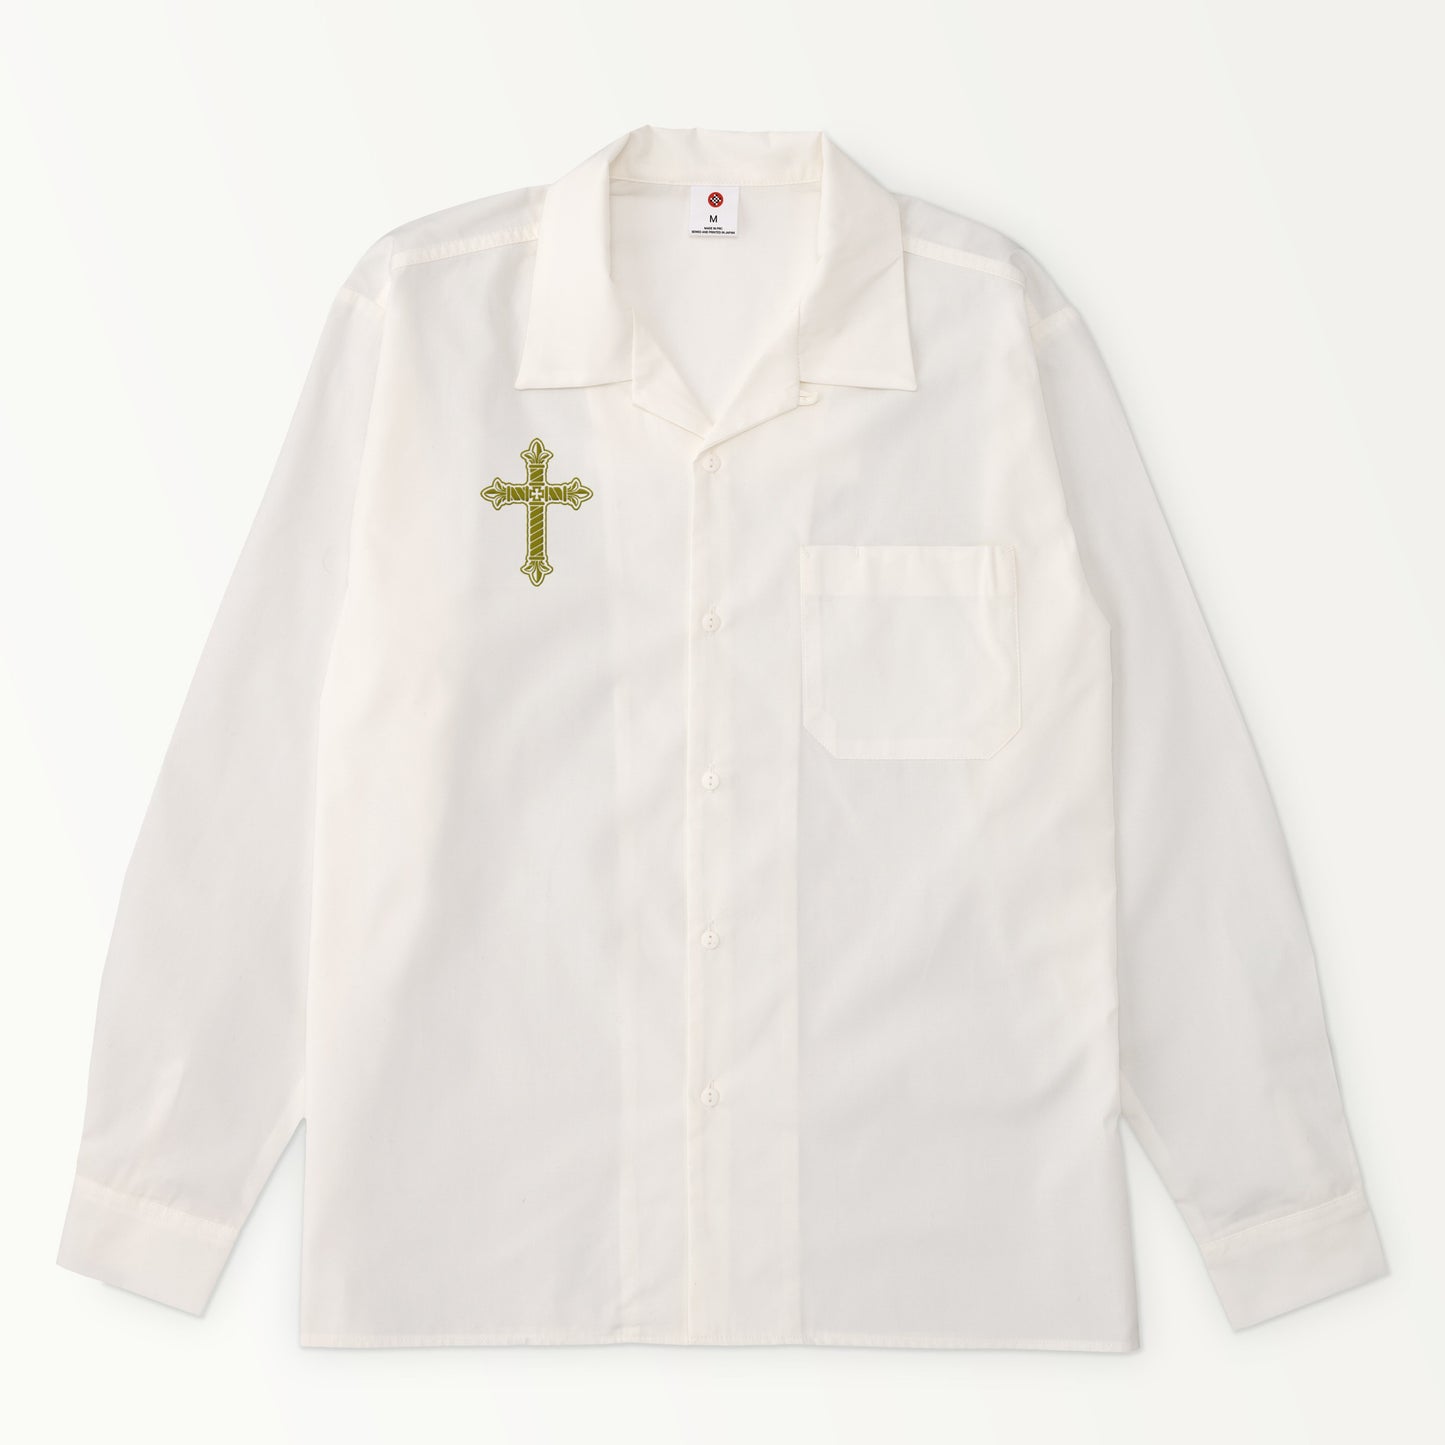 Royal cross embroidery open collar shirt